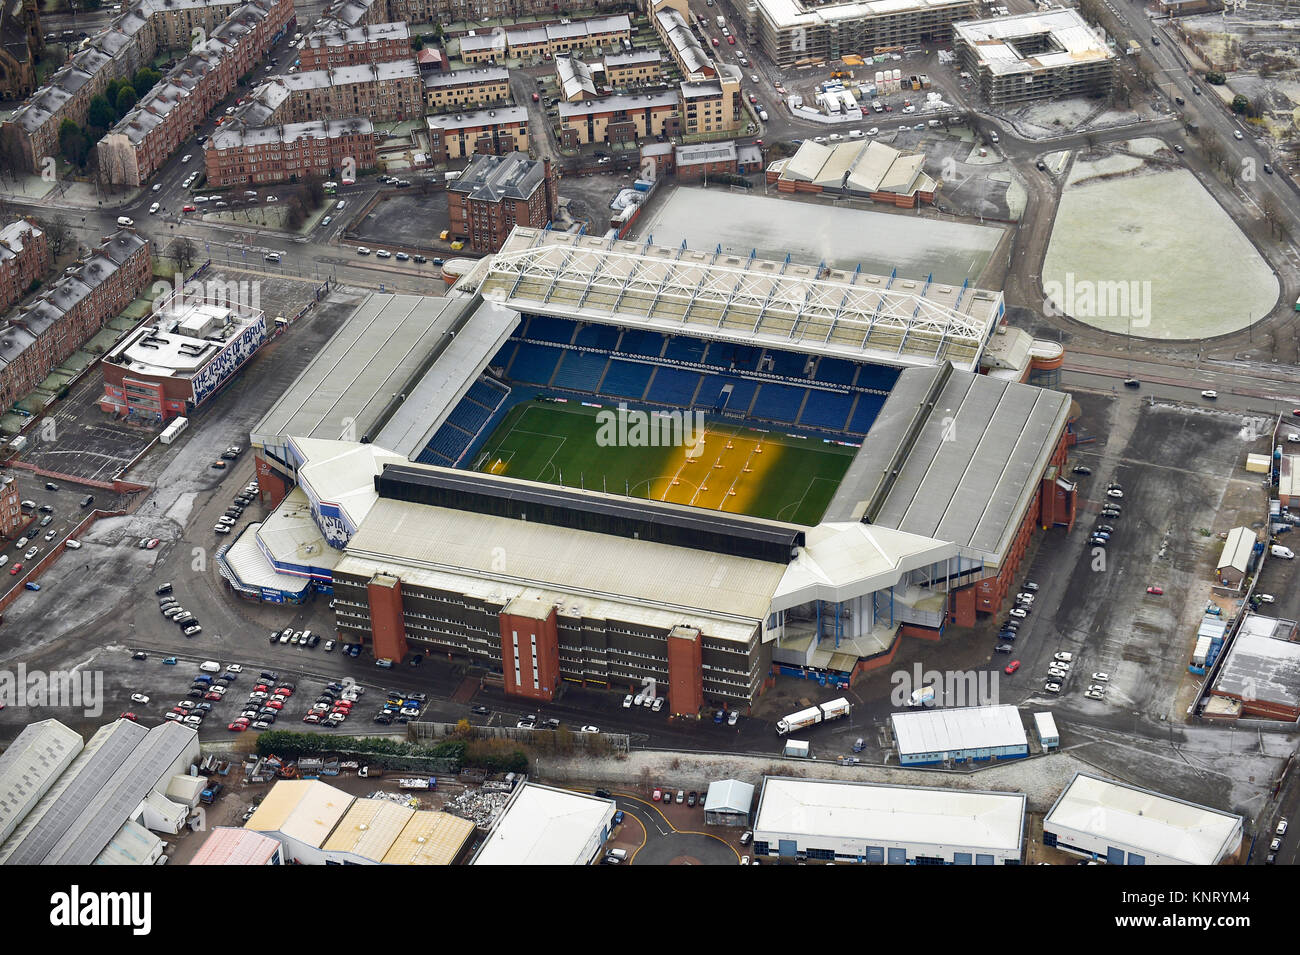 Vue aérienne du stade Ibrox, Glasgow Rangers Football Club d'accueil Banque D'Images